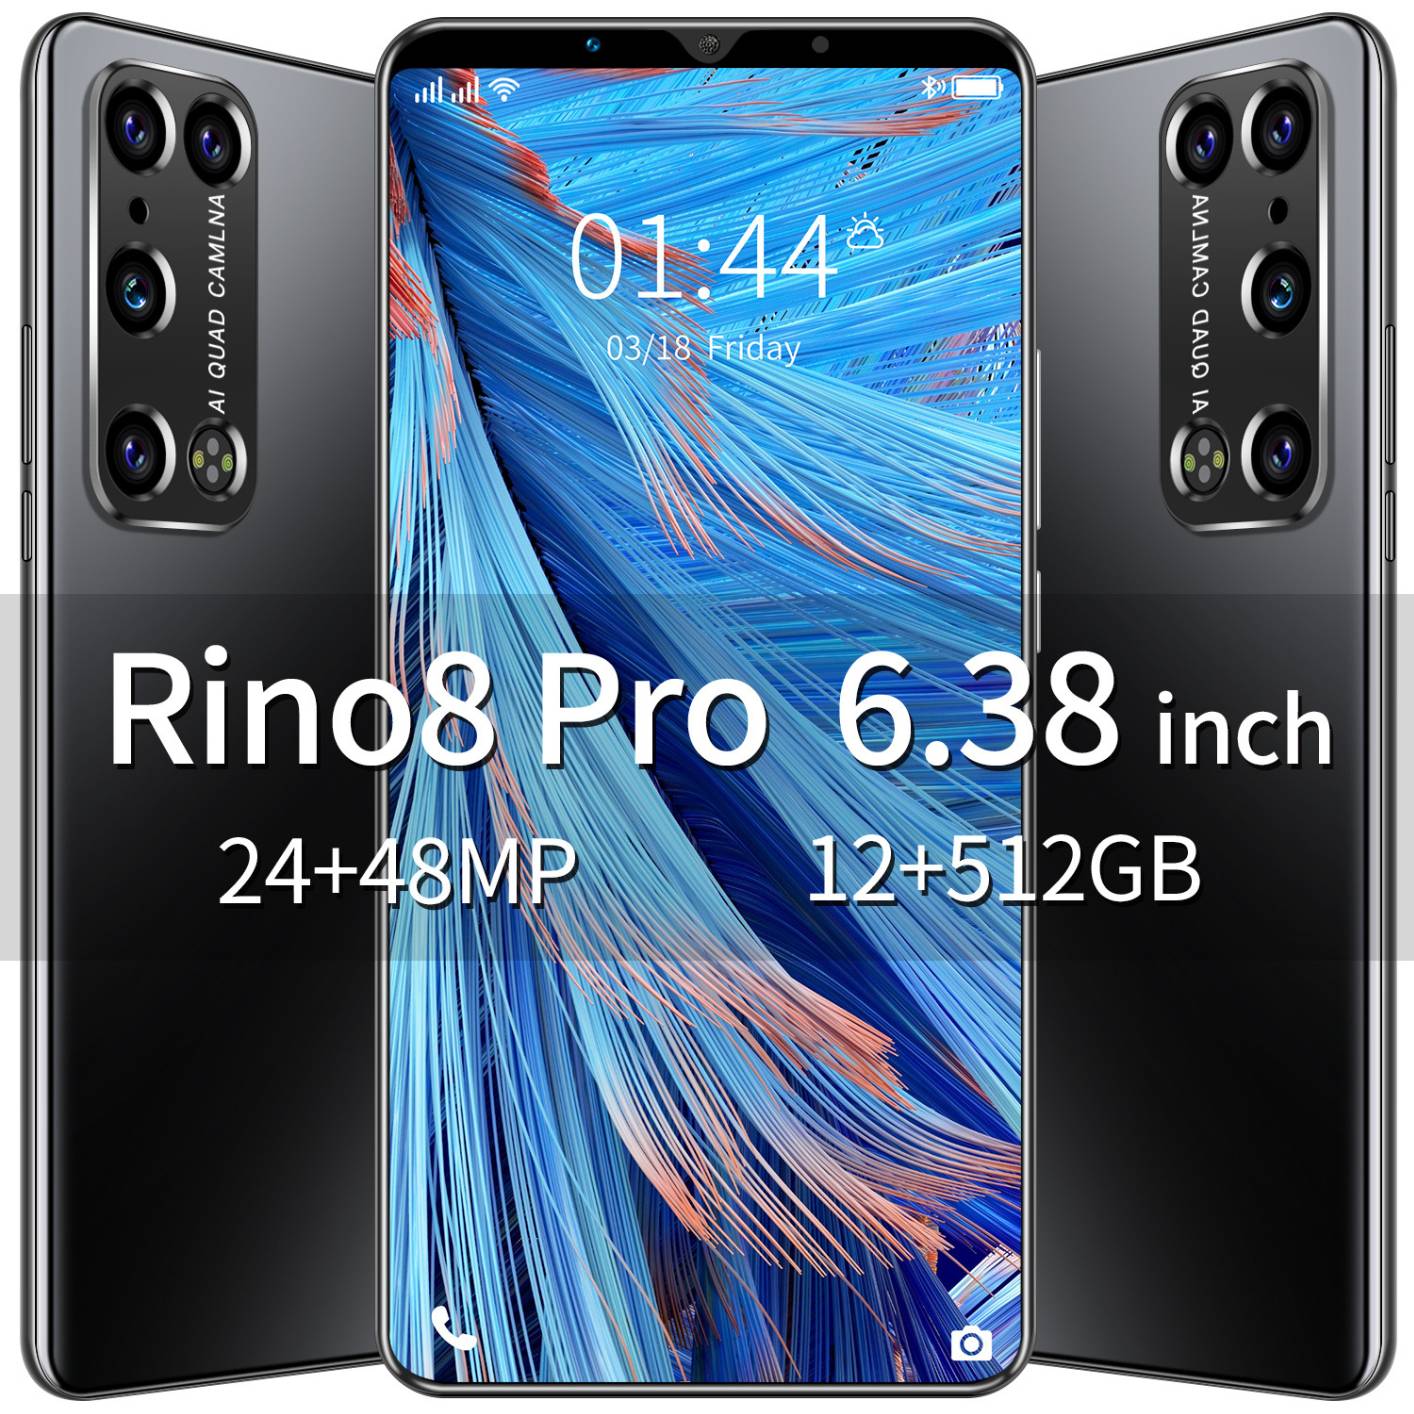 Global Version Smartphone Rino 8 pro 4GB 512MB 5.45 Inch 2200Ma Unlock Android 4.4.2 Mobile Phone Celular Daul SIM Card UK Plug